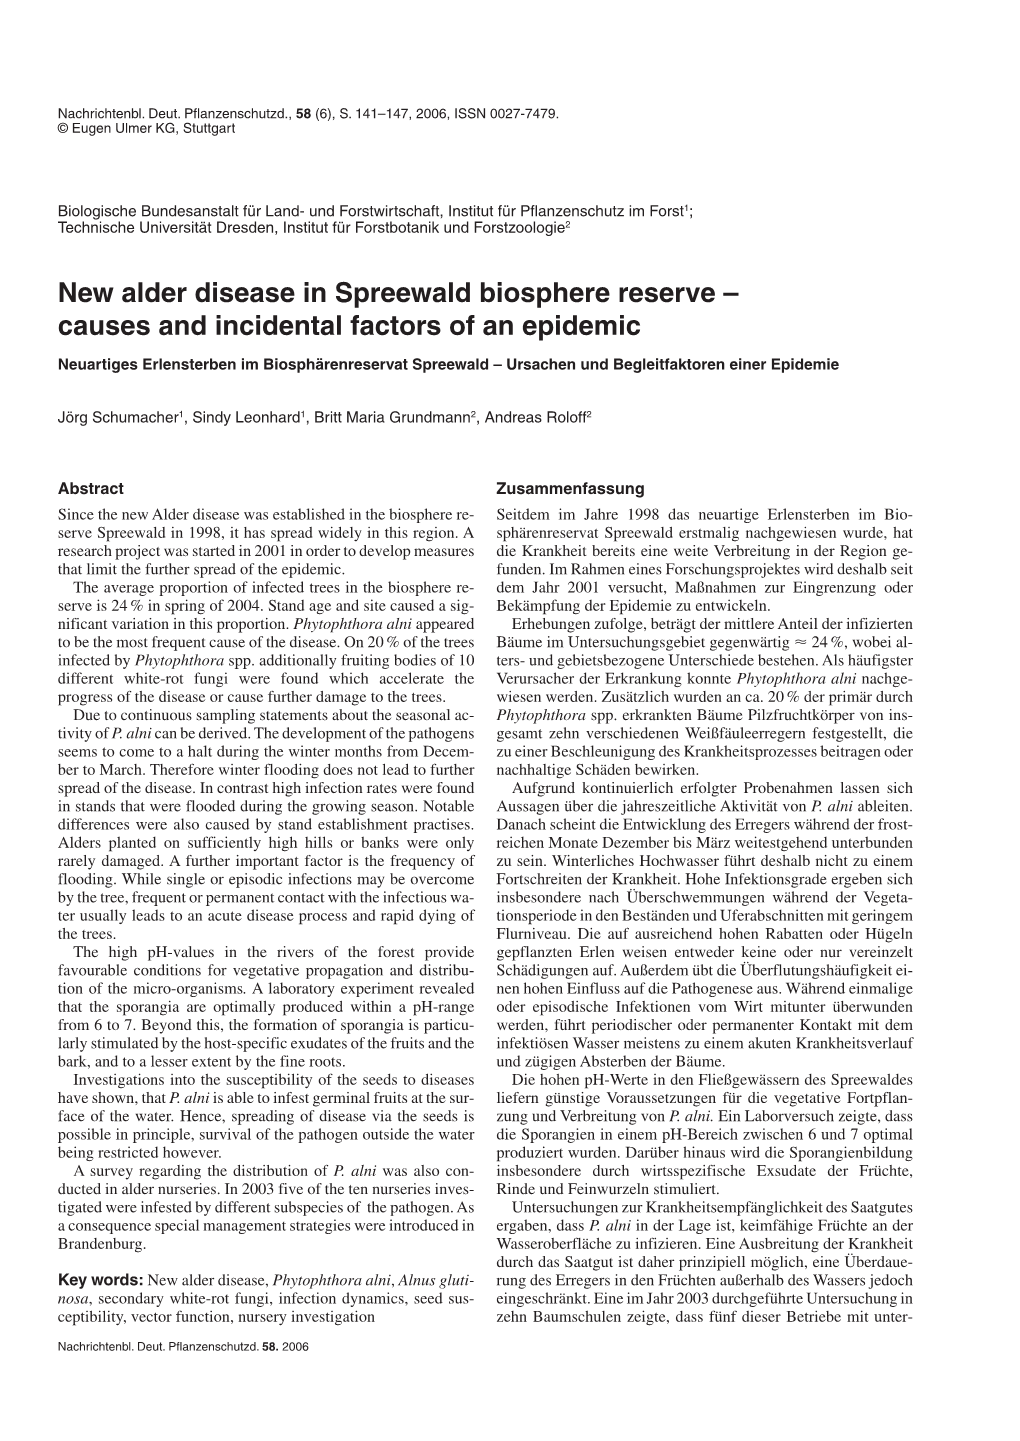 New Alder Disease in Spreewald Biosphere Reserve – Causes and Incidental Factorsofanepidemic